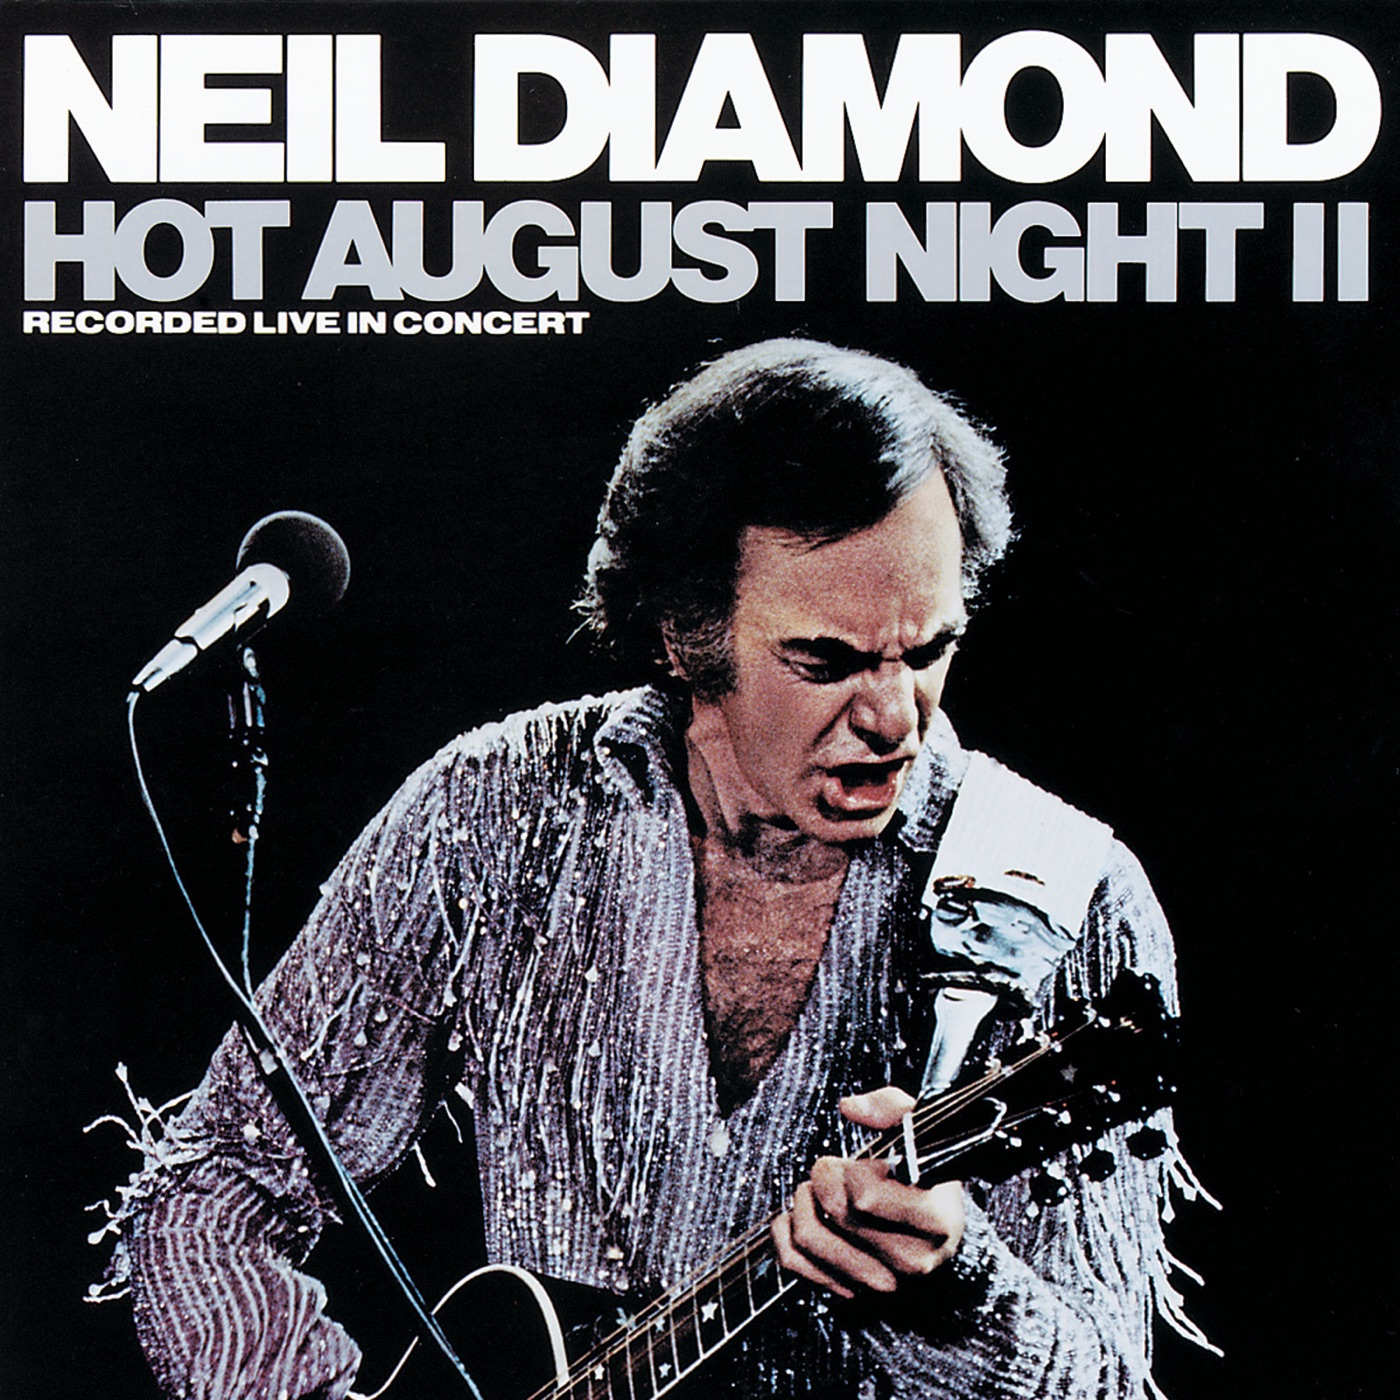 Hot August Night II by Neil Diamond, Hot August Night II